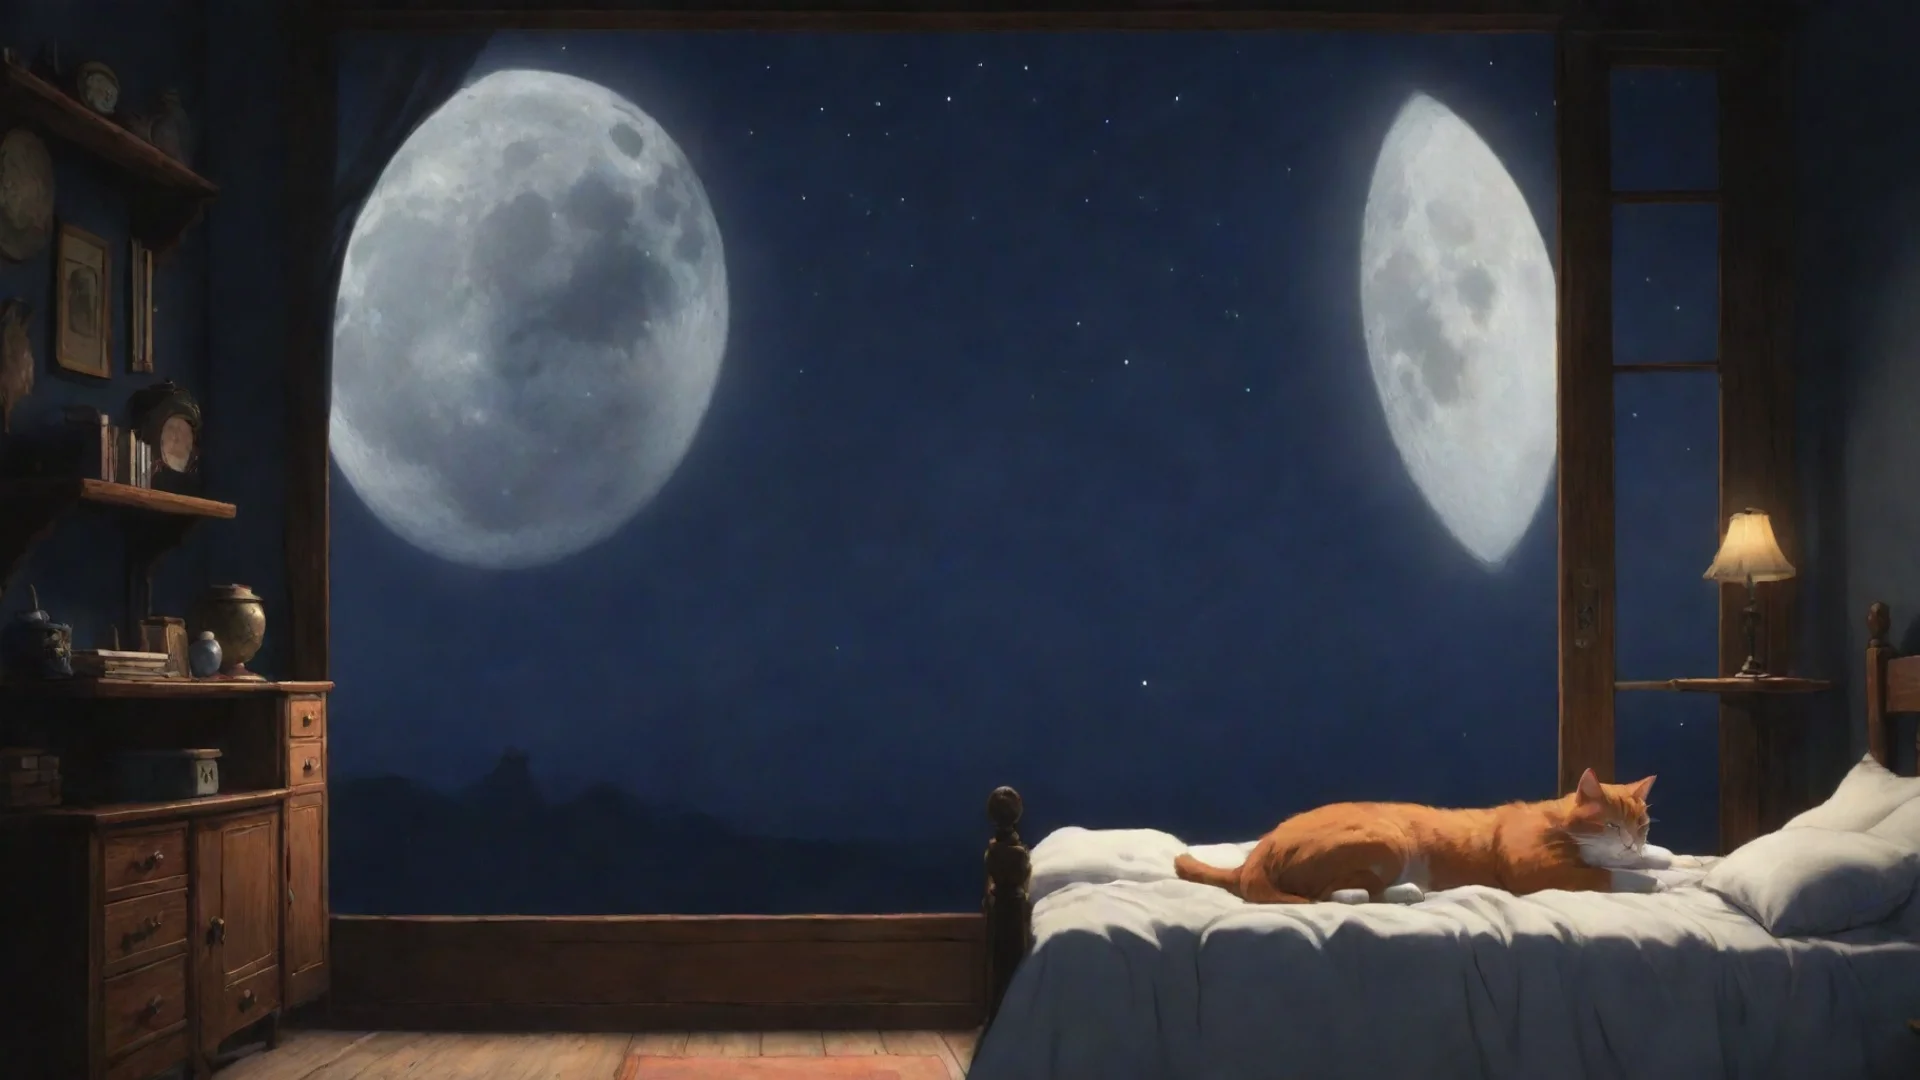 aiamazing ghibli cat sleeping room dark night hd detailed moon  awesome portrait 2 hdwidescreen